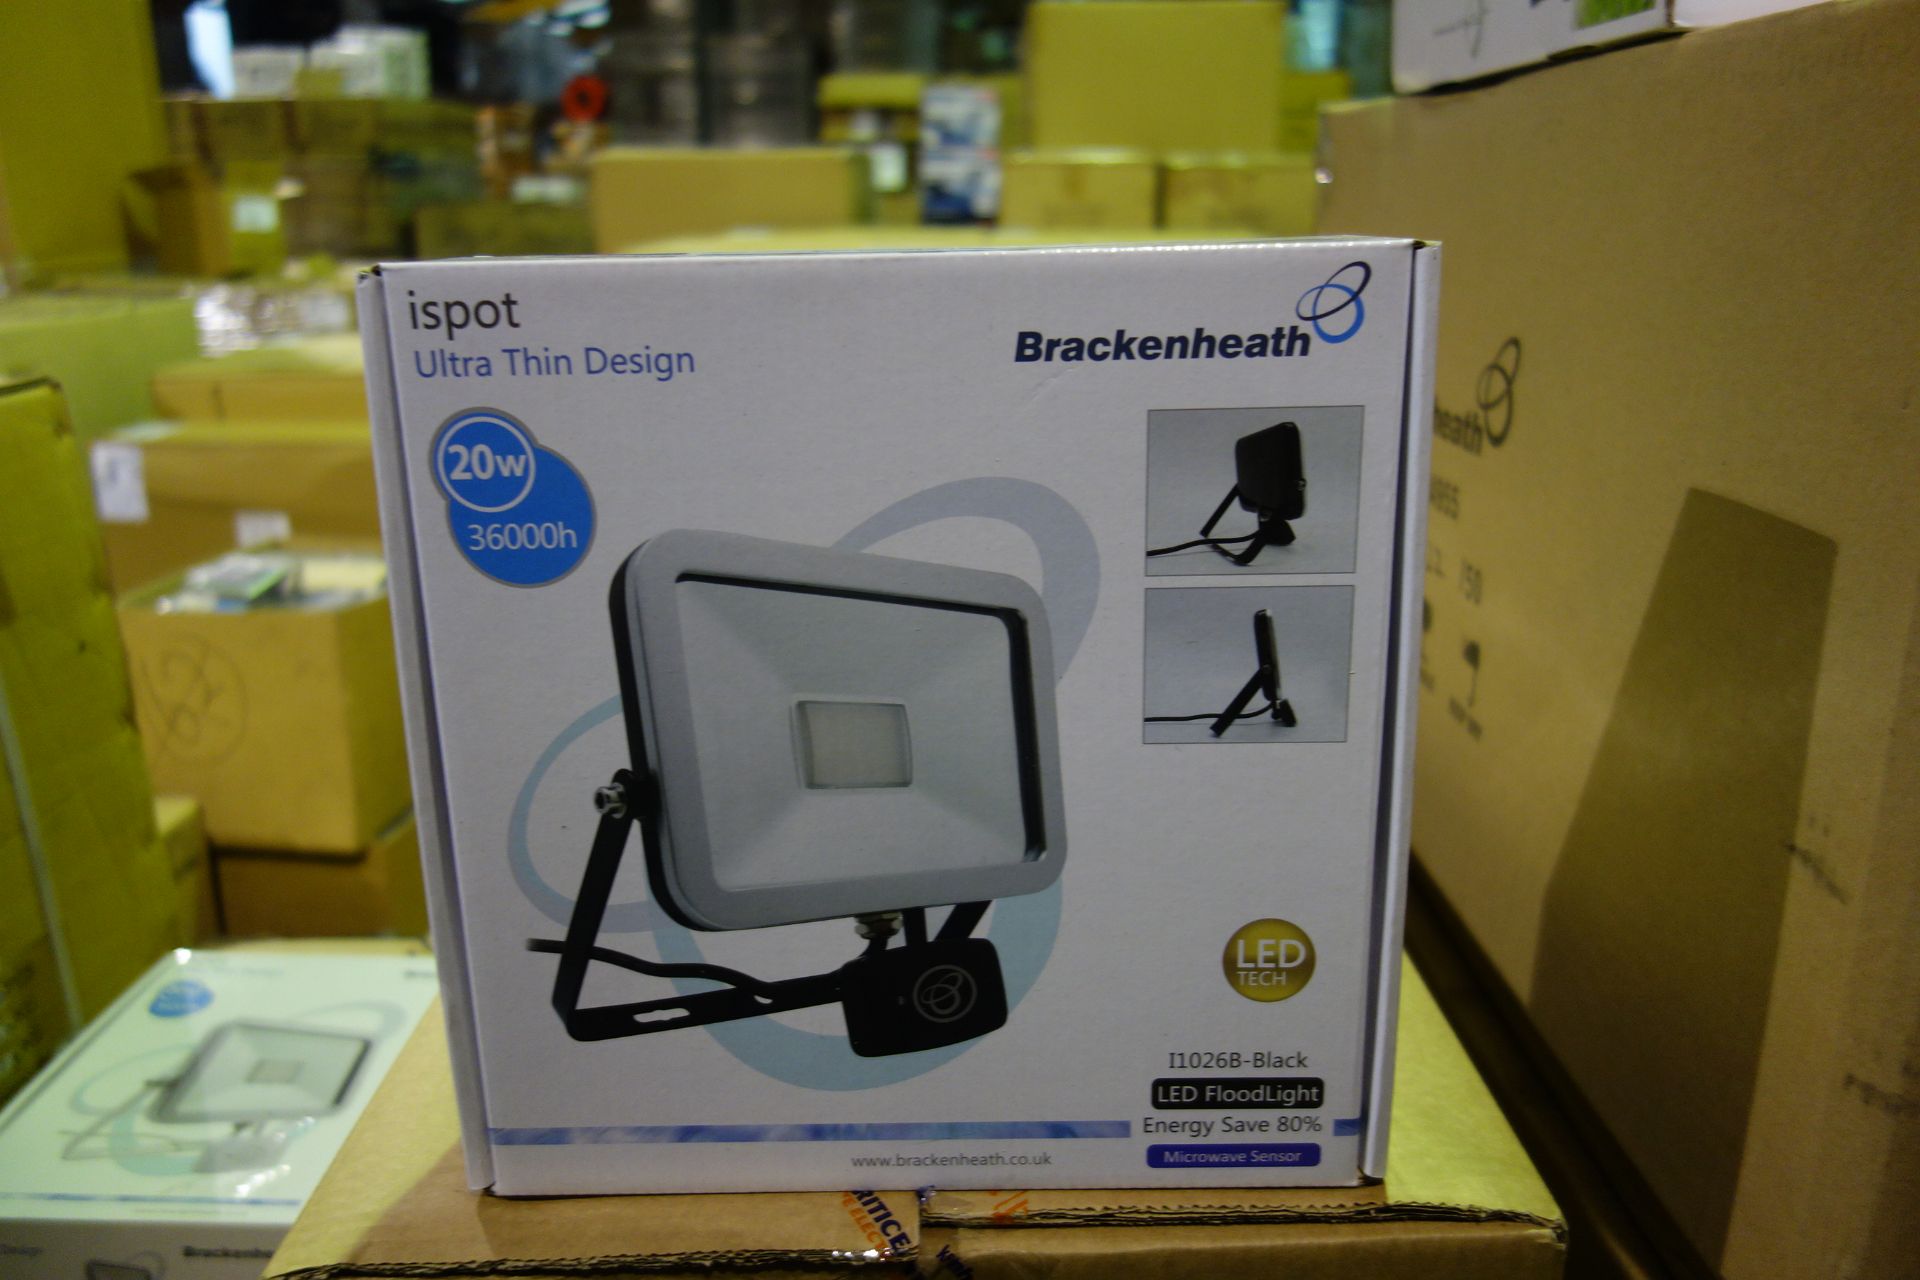 10 X Brakenheath I 1026B-Black LED Floodlight 20W 36000H With Microwave Sensor